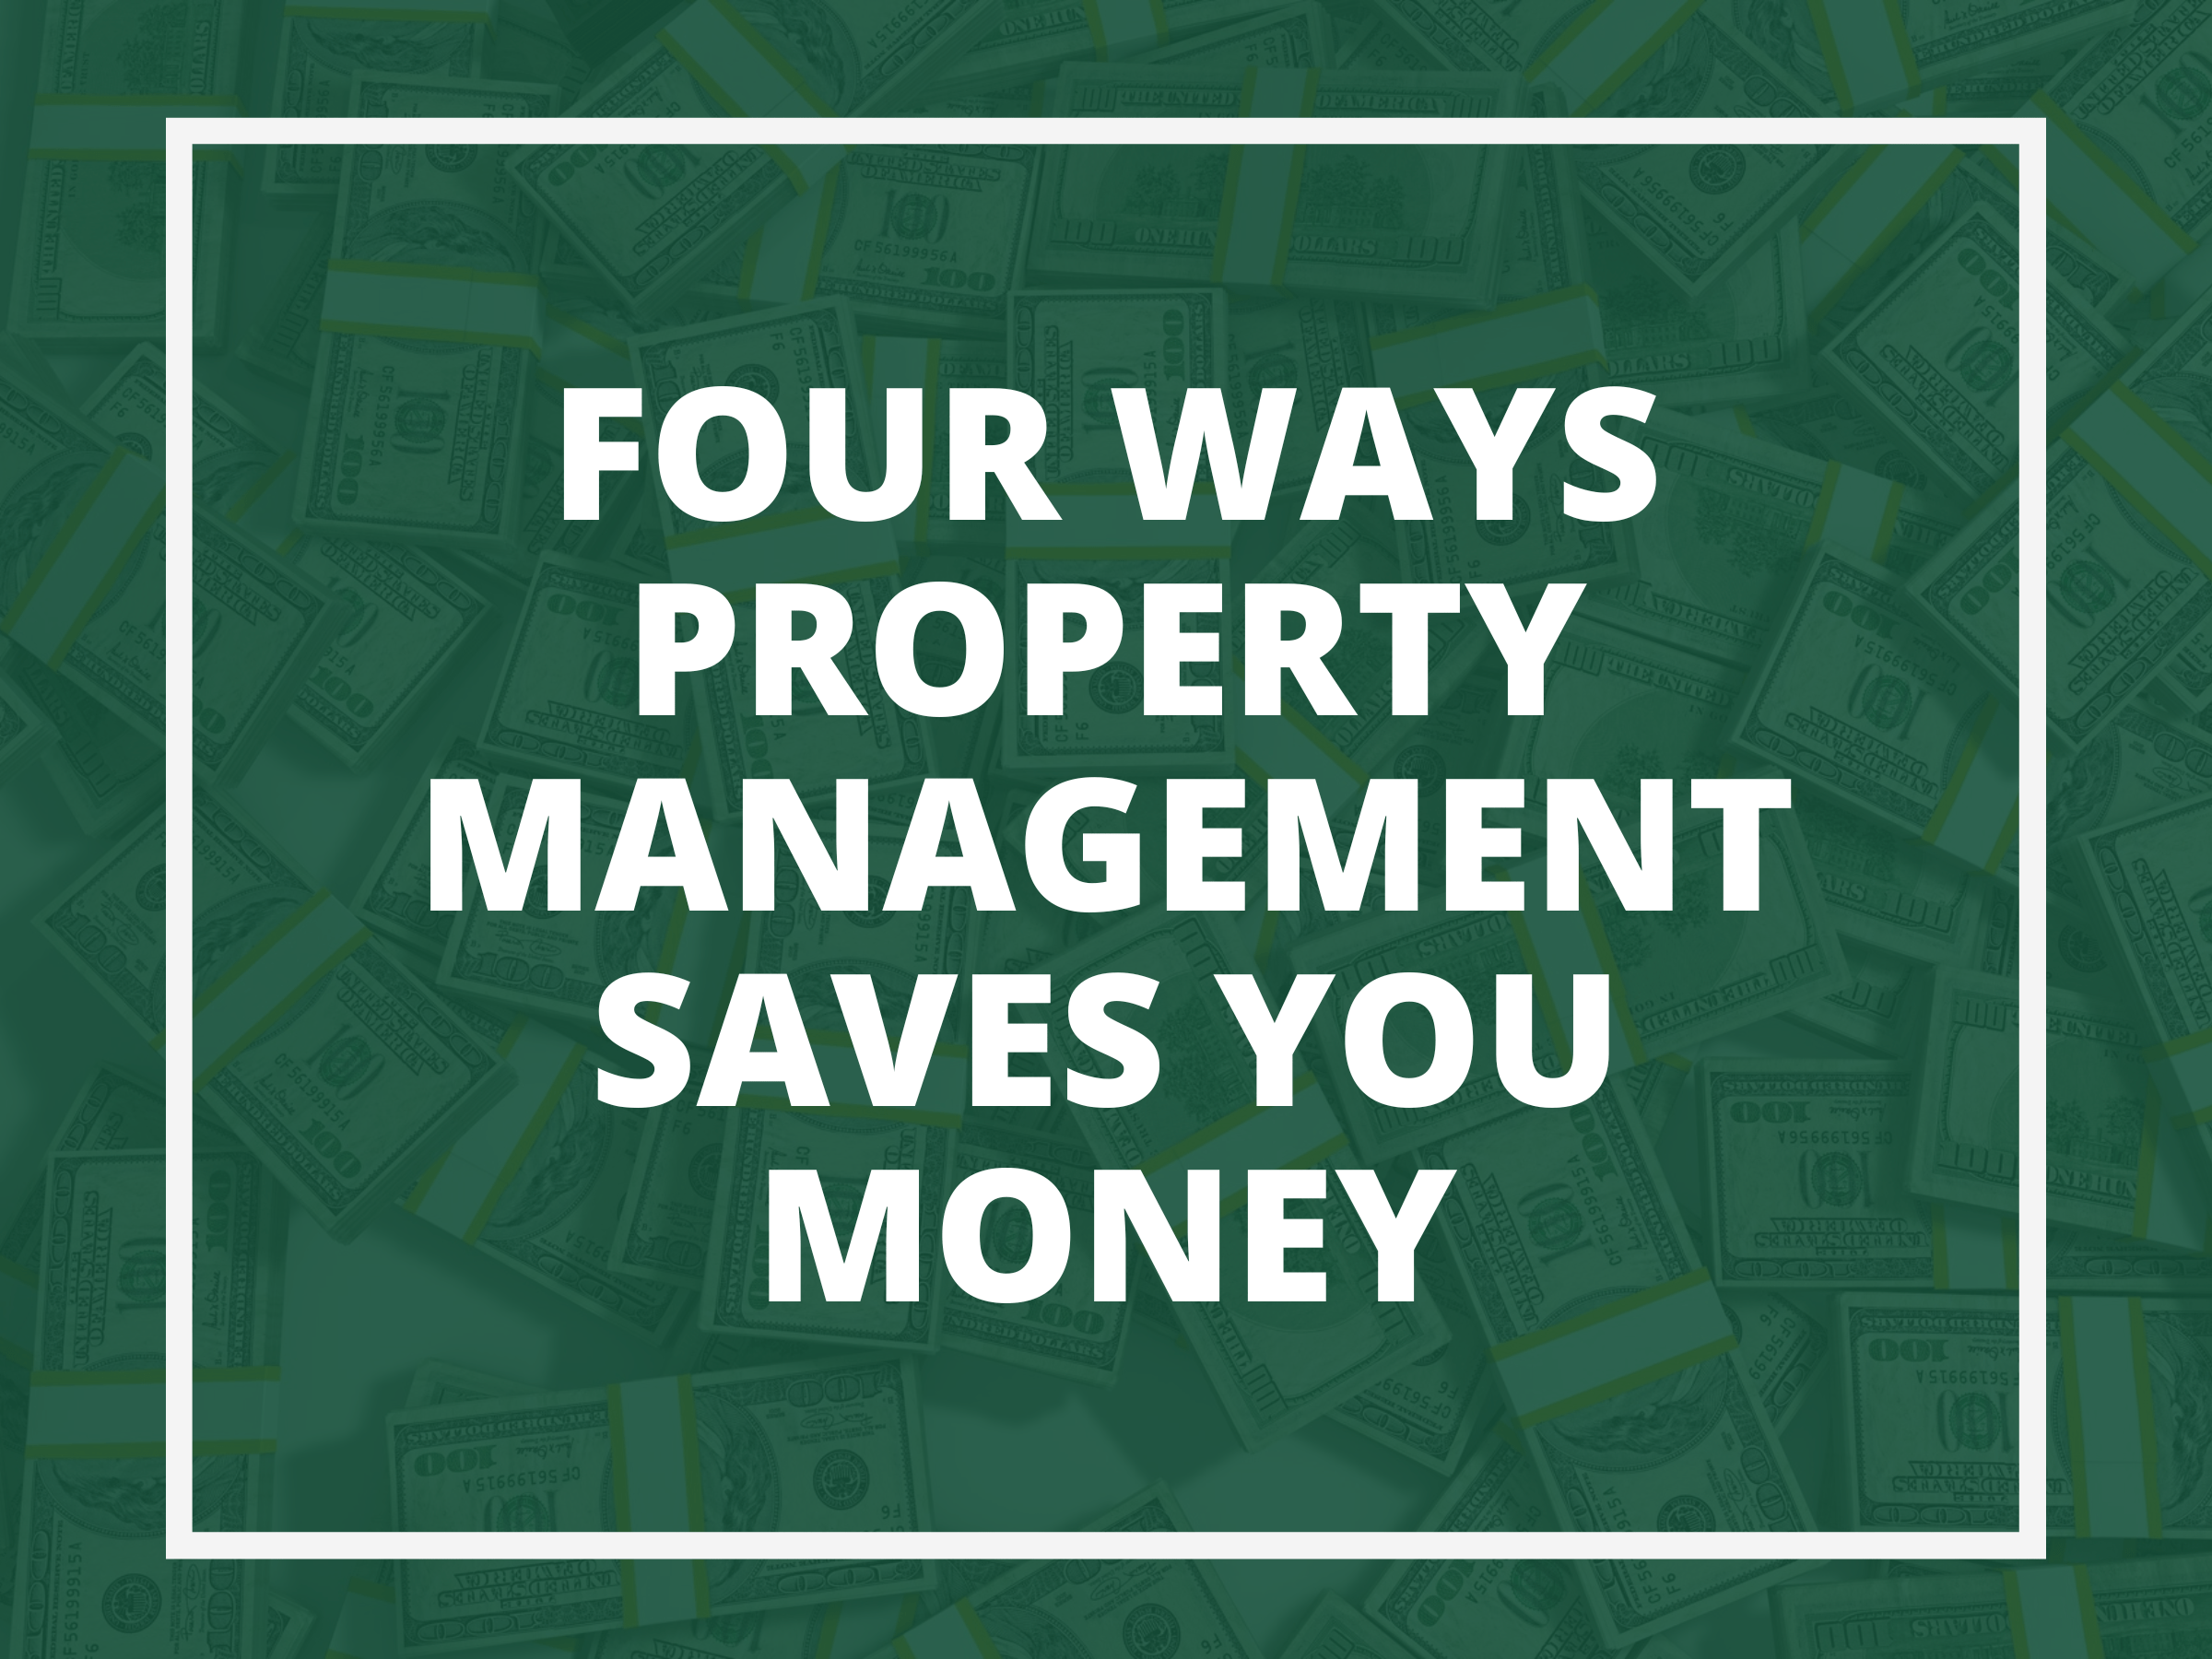 Four Ways Property Management Saves You Money